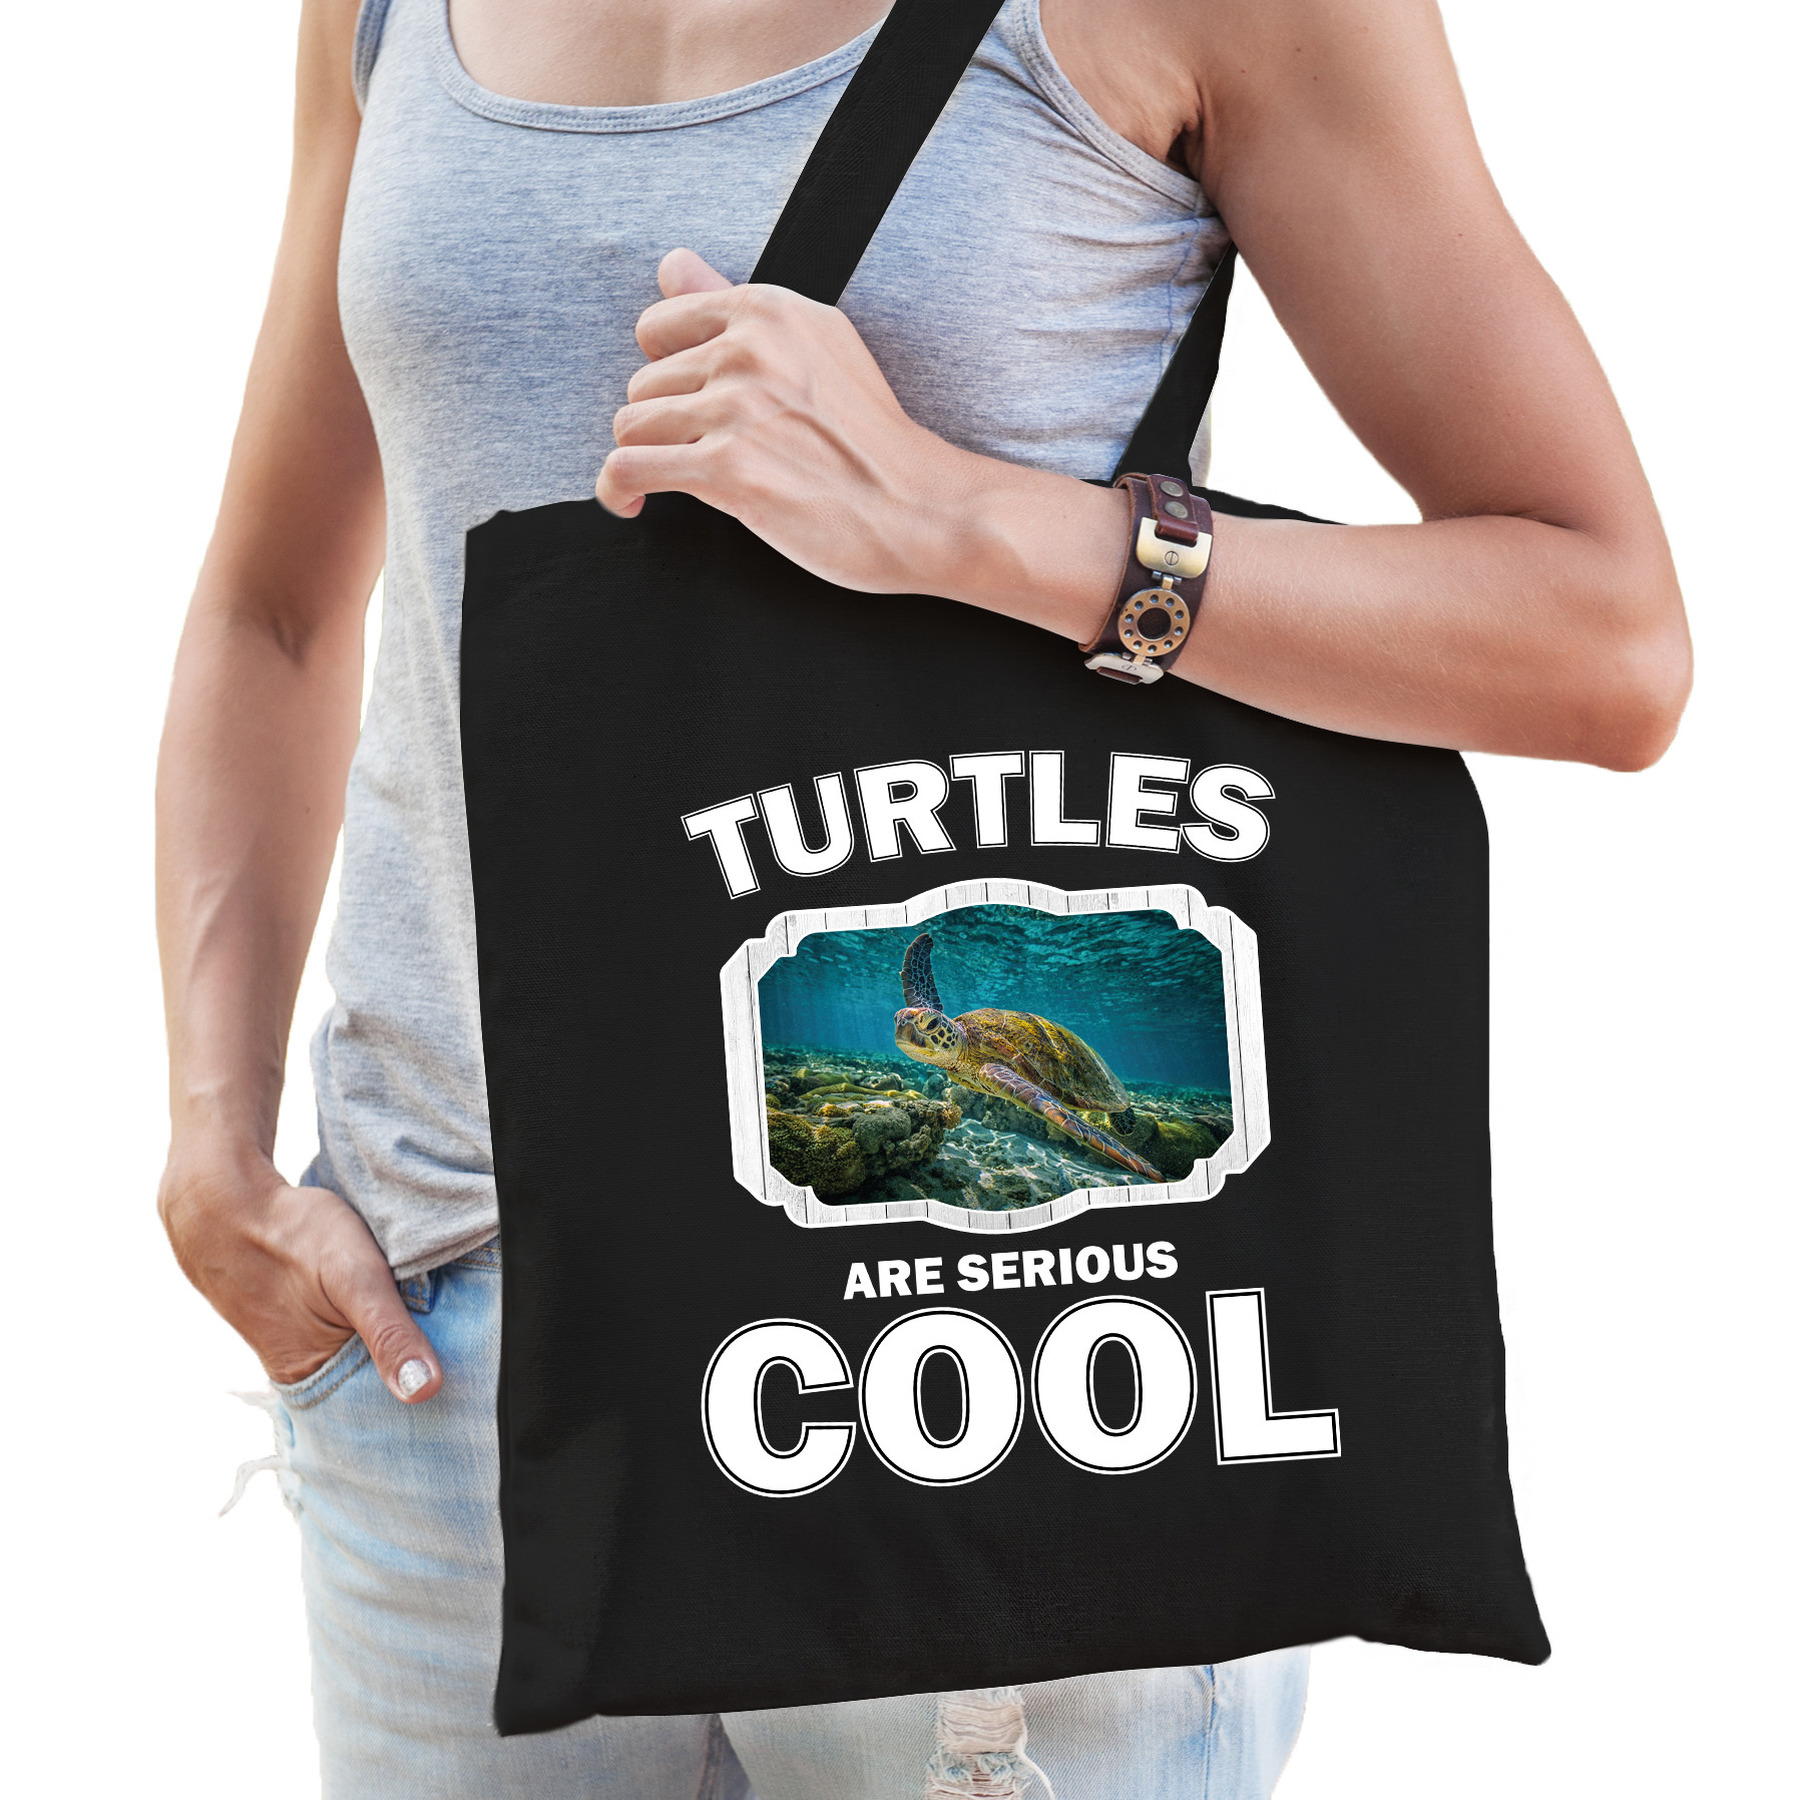 Katoenen tasje turtles are serious cool zwart - schildpadden/ zee schildpad cadeau tas